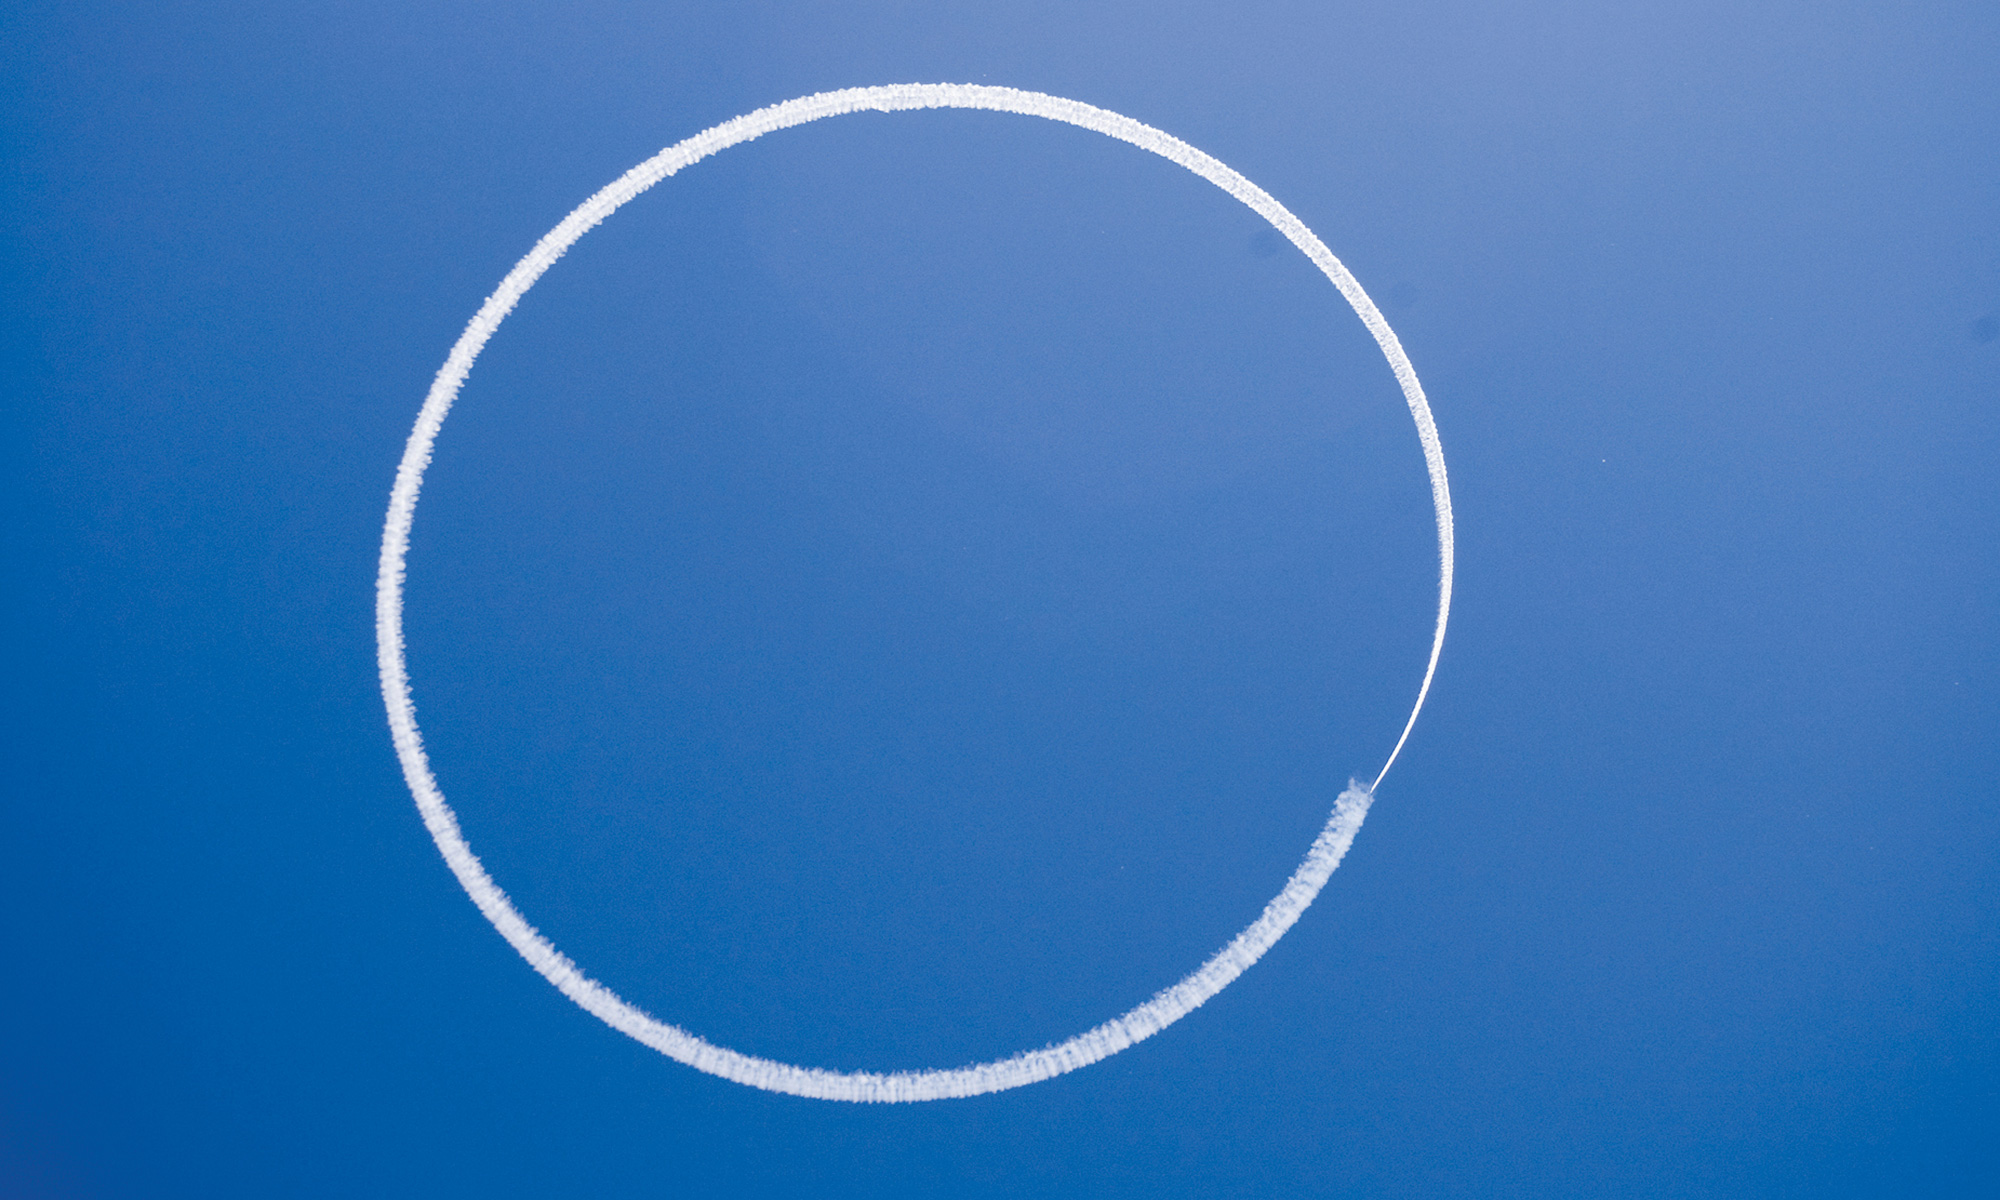 A photograph of a circular smoke signal against a blue sky.